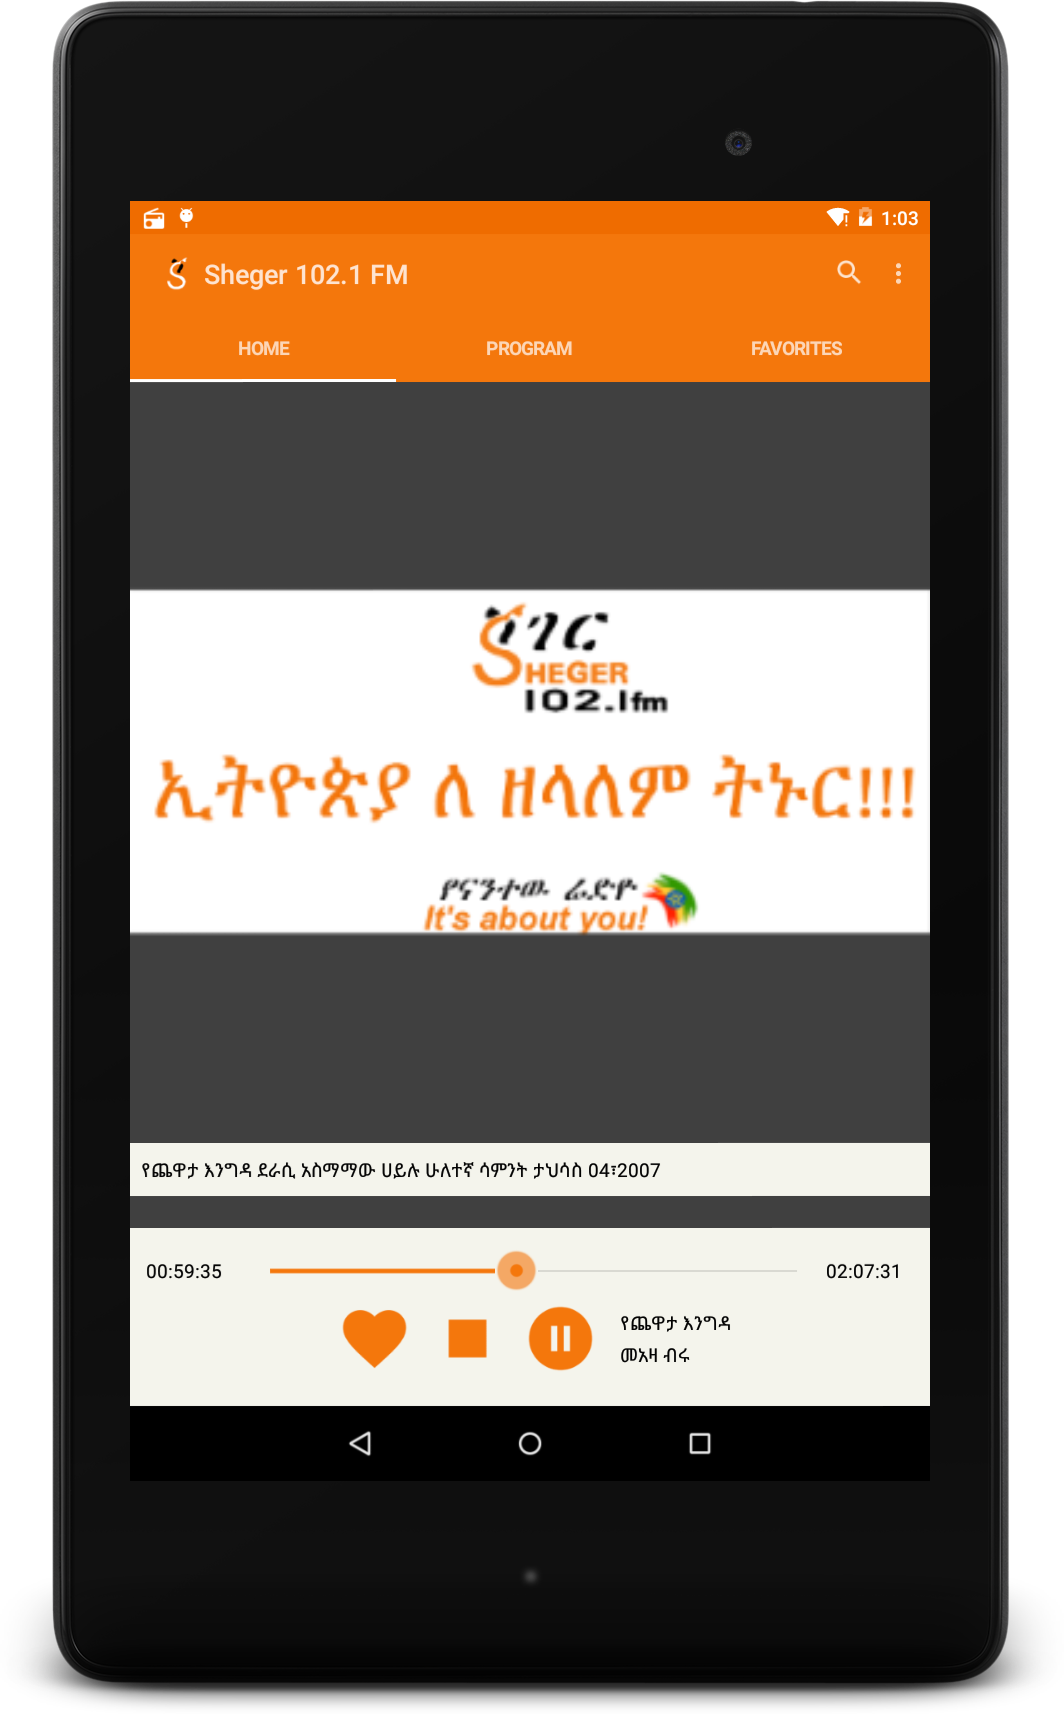 Sheger 102.1 FM APK 4.5.3 for Android – Download Sheger 102.1 FM APK Latest  Version from APKFab.com